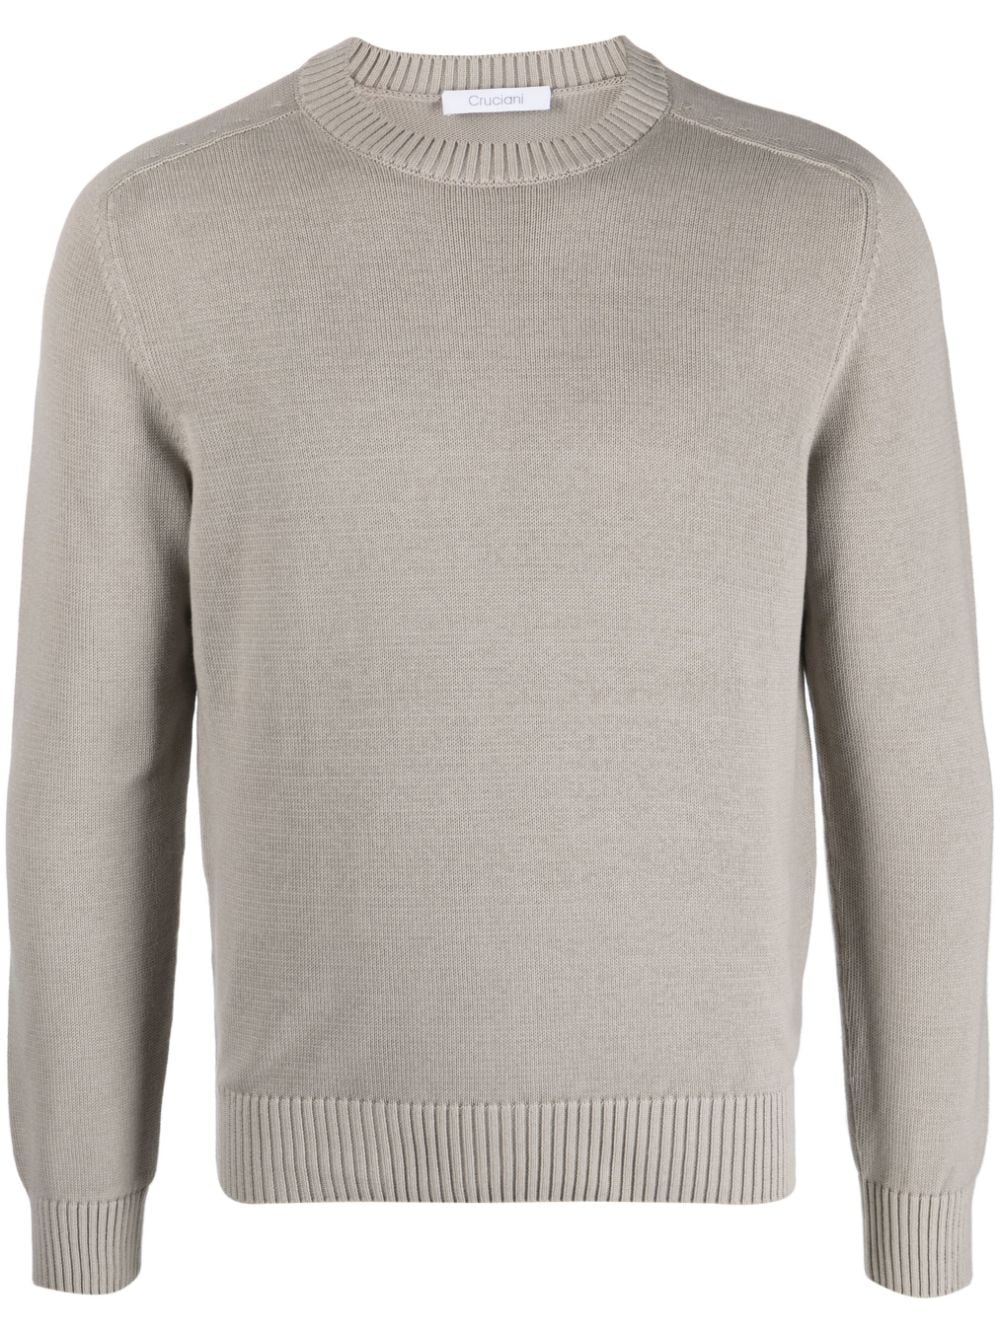 Cruciani fine-knit cotton jumper